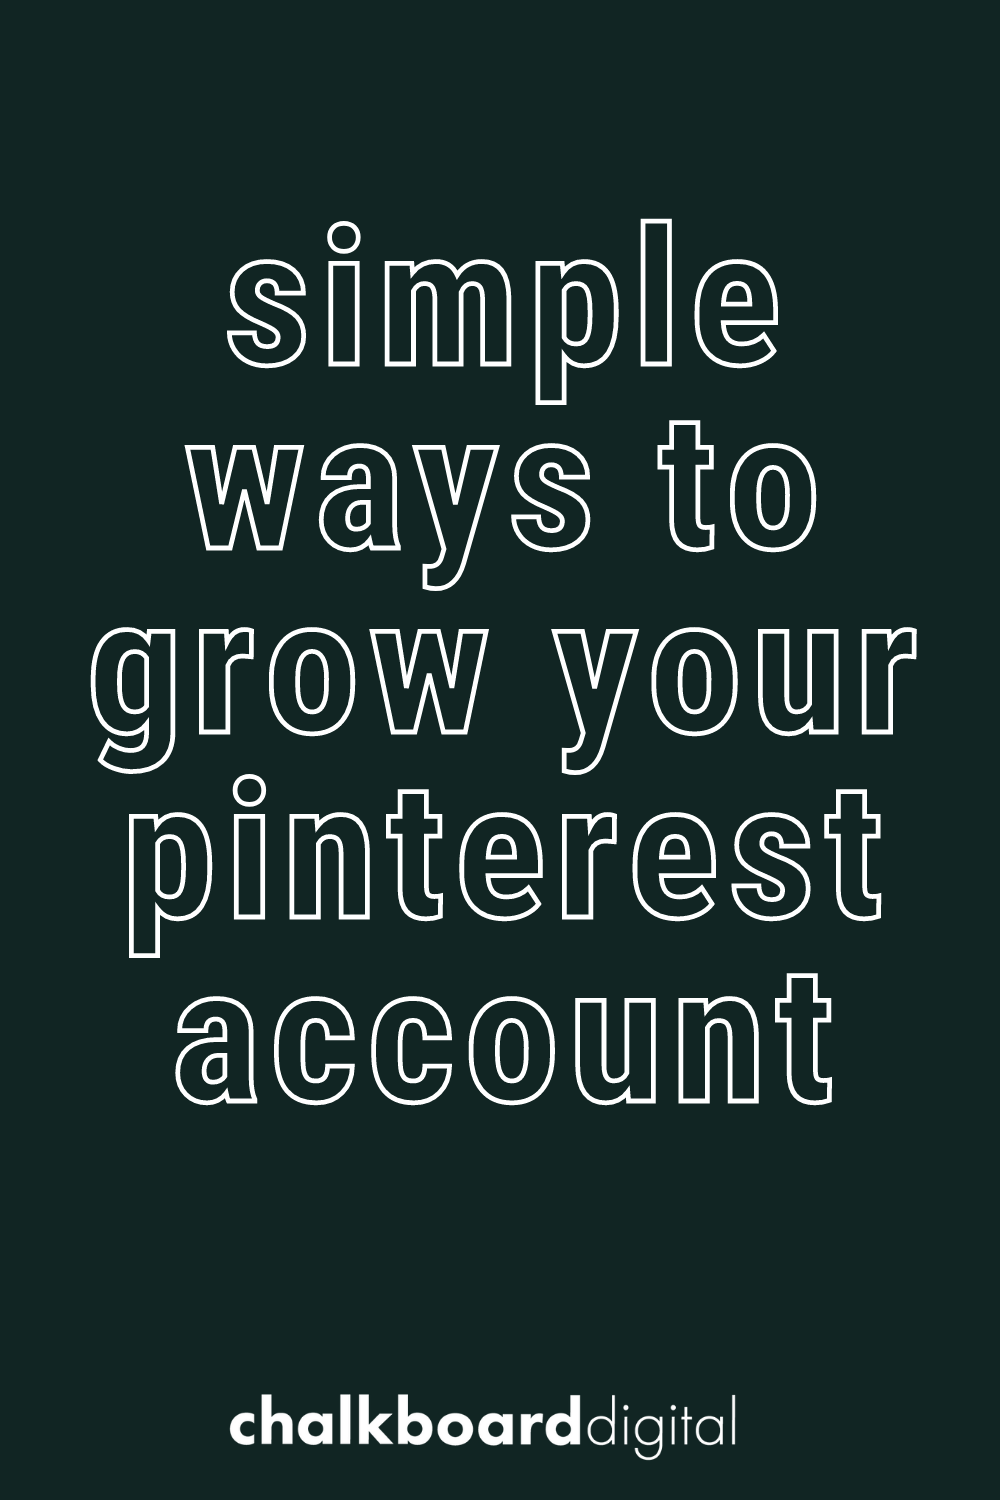 Grow your Pinterest account -  chalkboarddigital (2).png